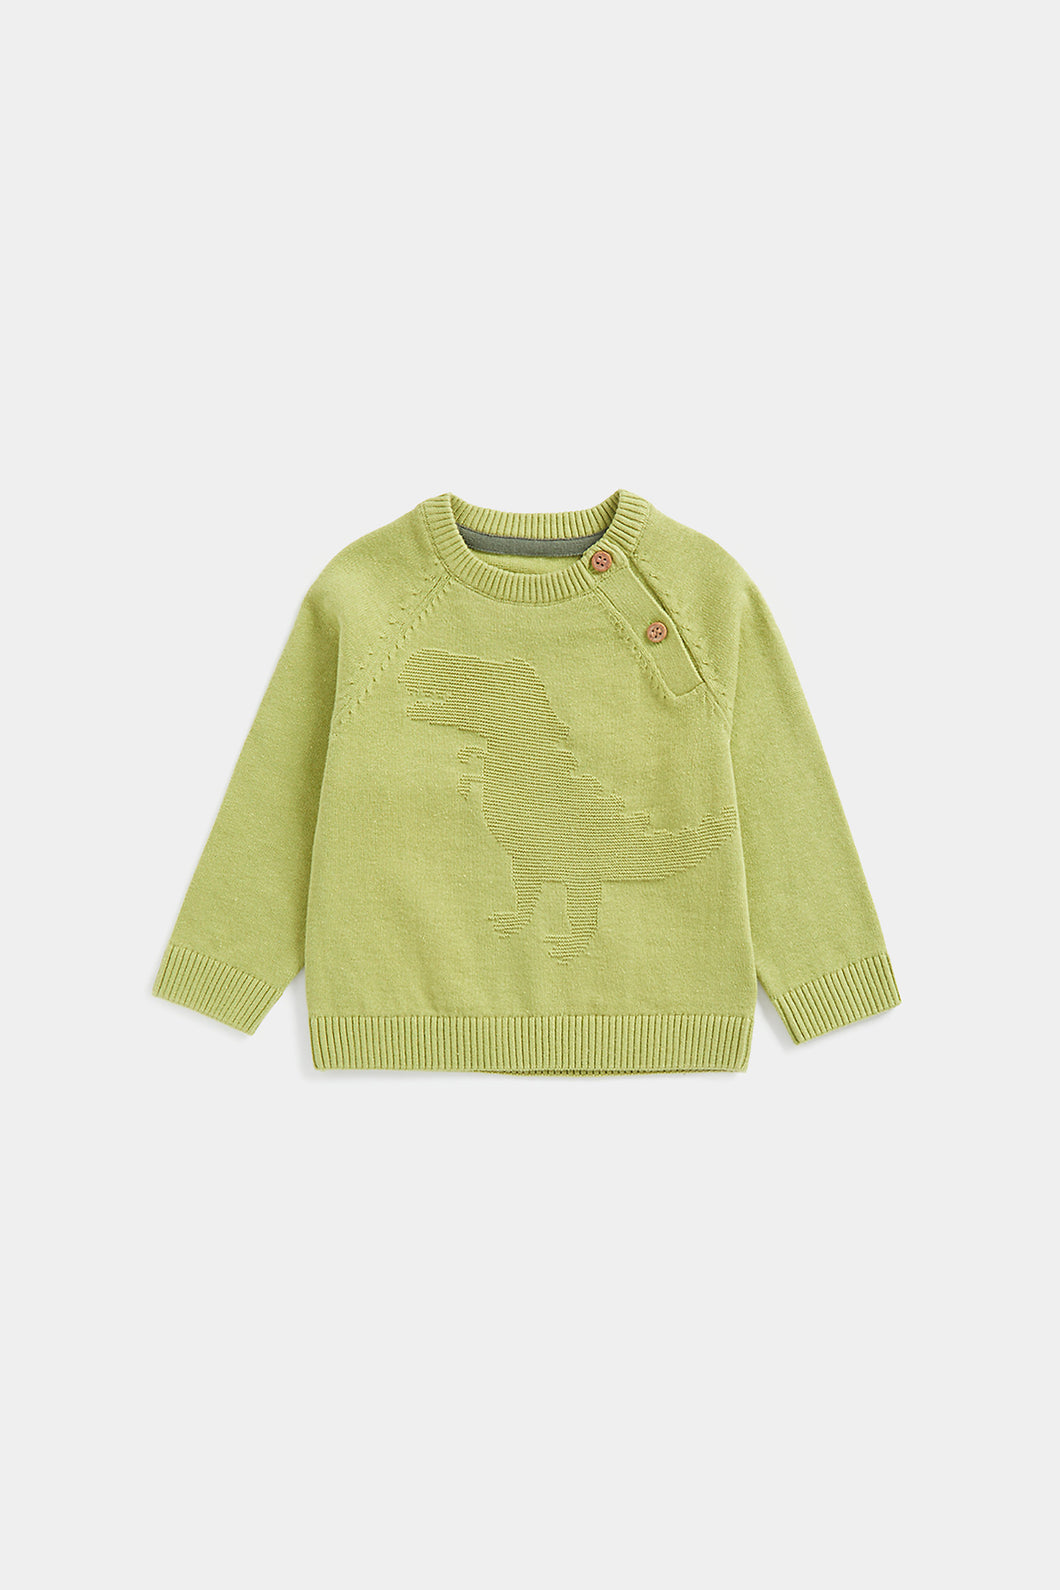 Mothercare Green Dinosaur Knitted Jumper